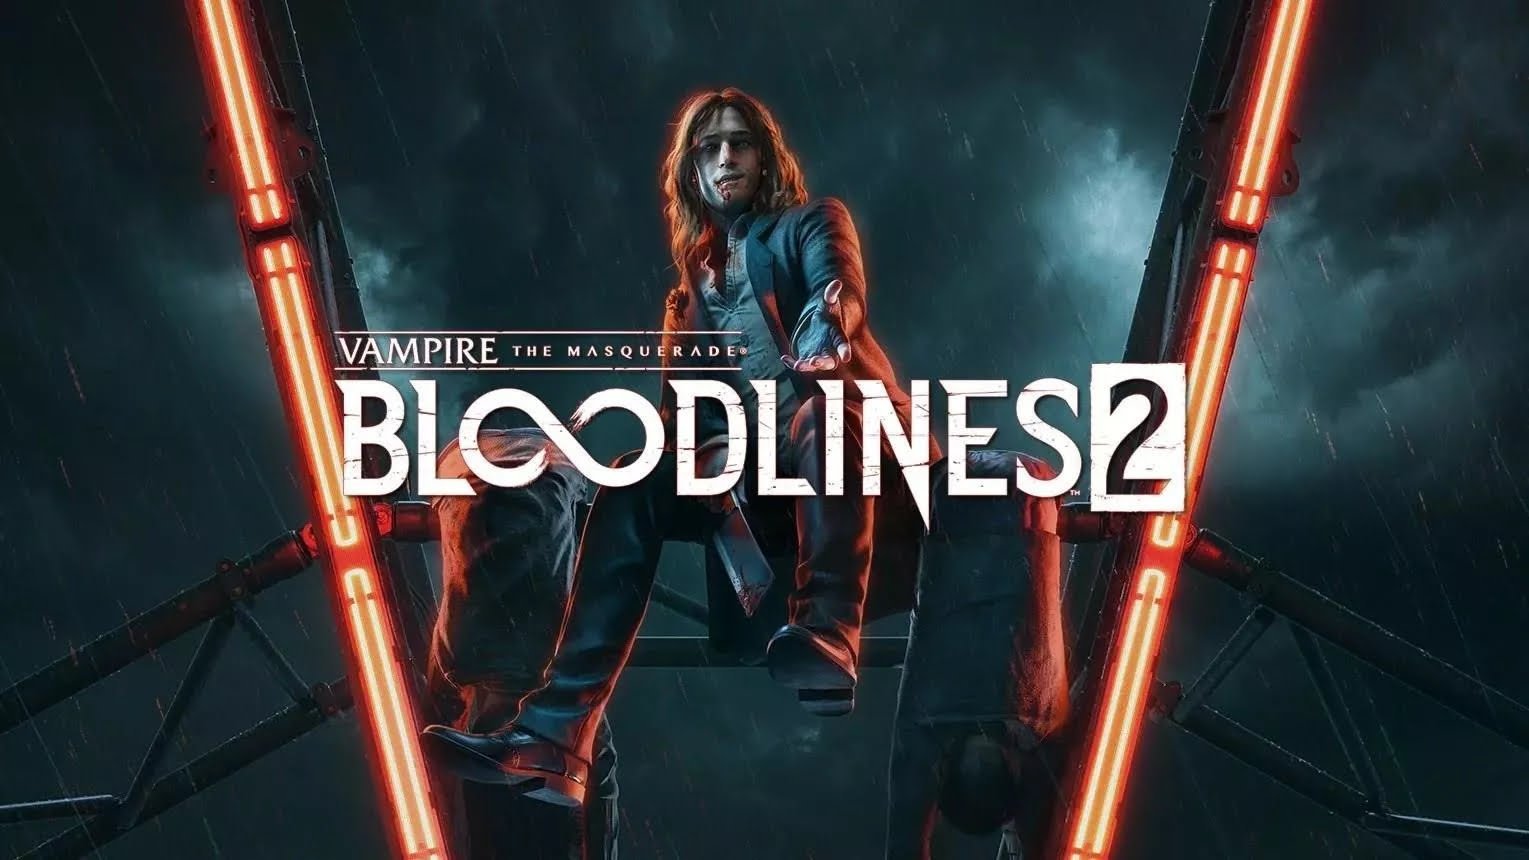 Vampire The Masquerade Bloodlines 2 premiera